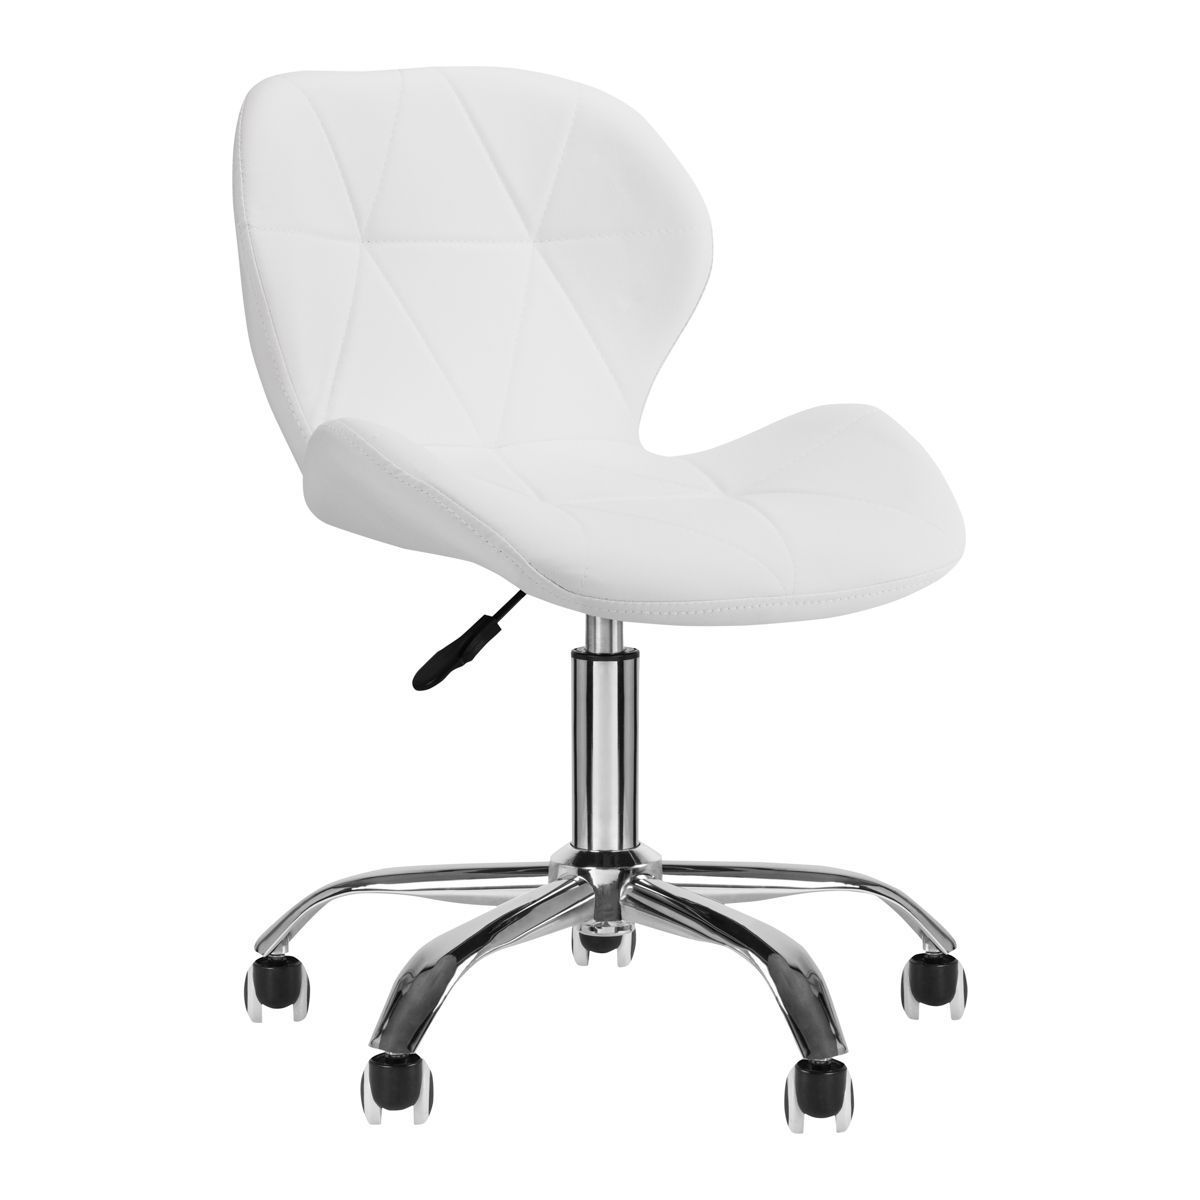 Kosmetická židle QS-06 bílá